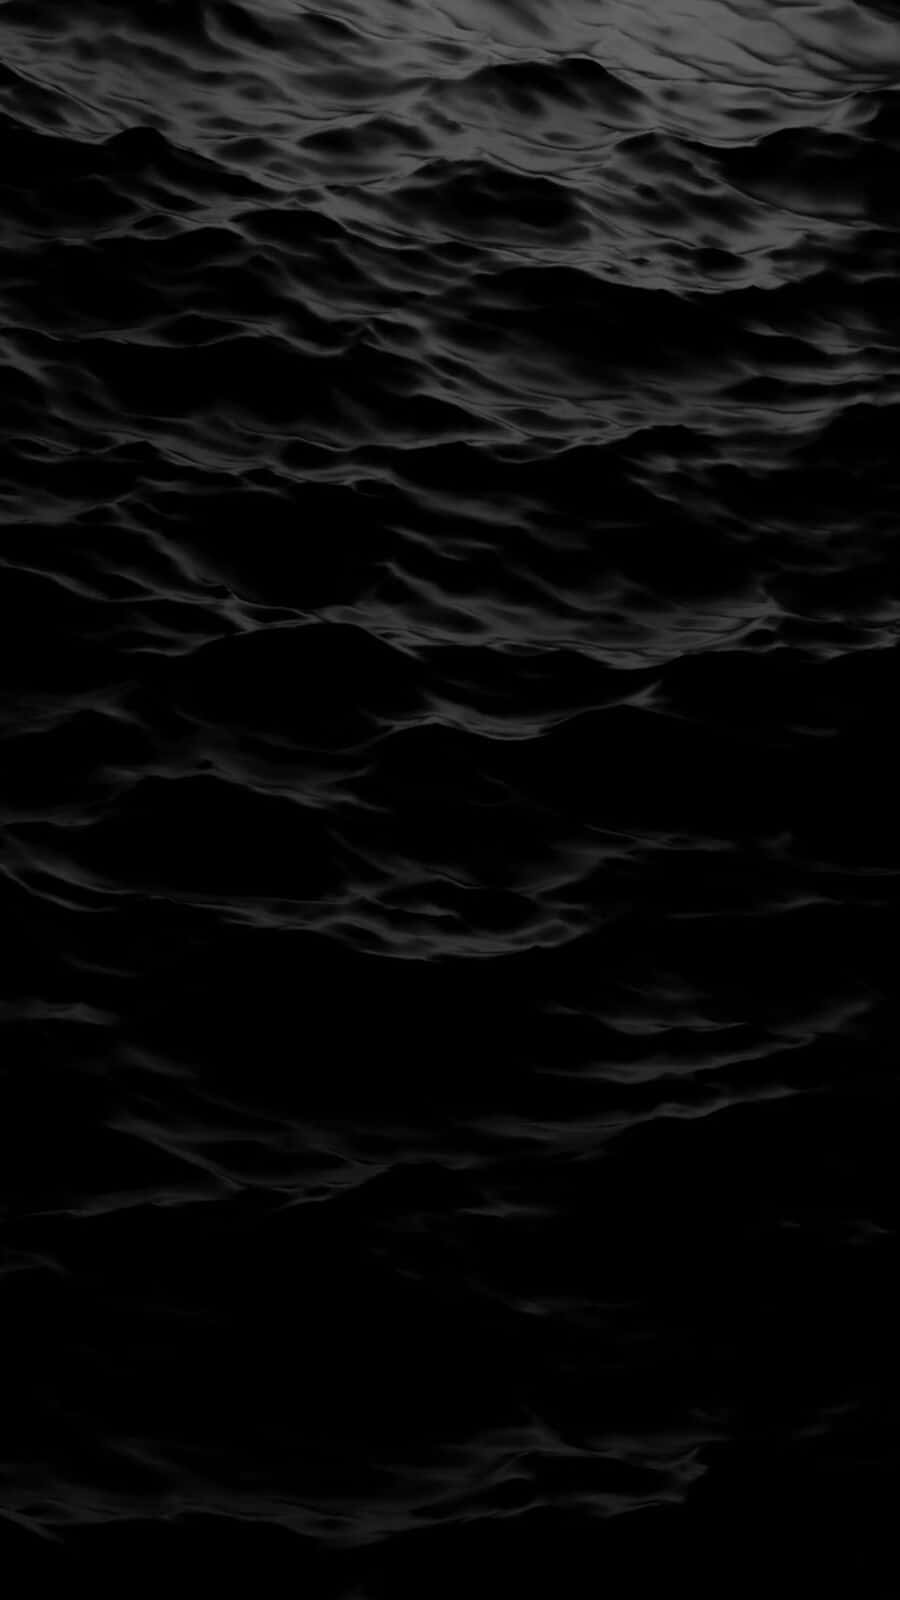 Vantablack - The Darkest Material on Earth Wallpaper